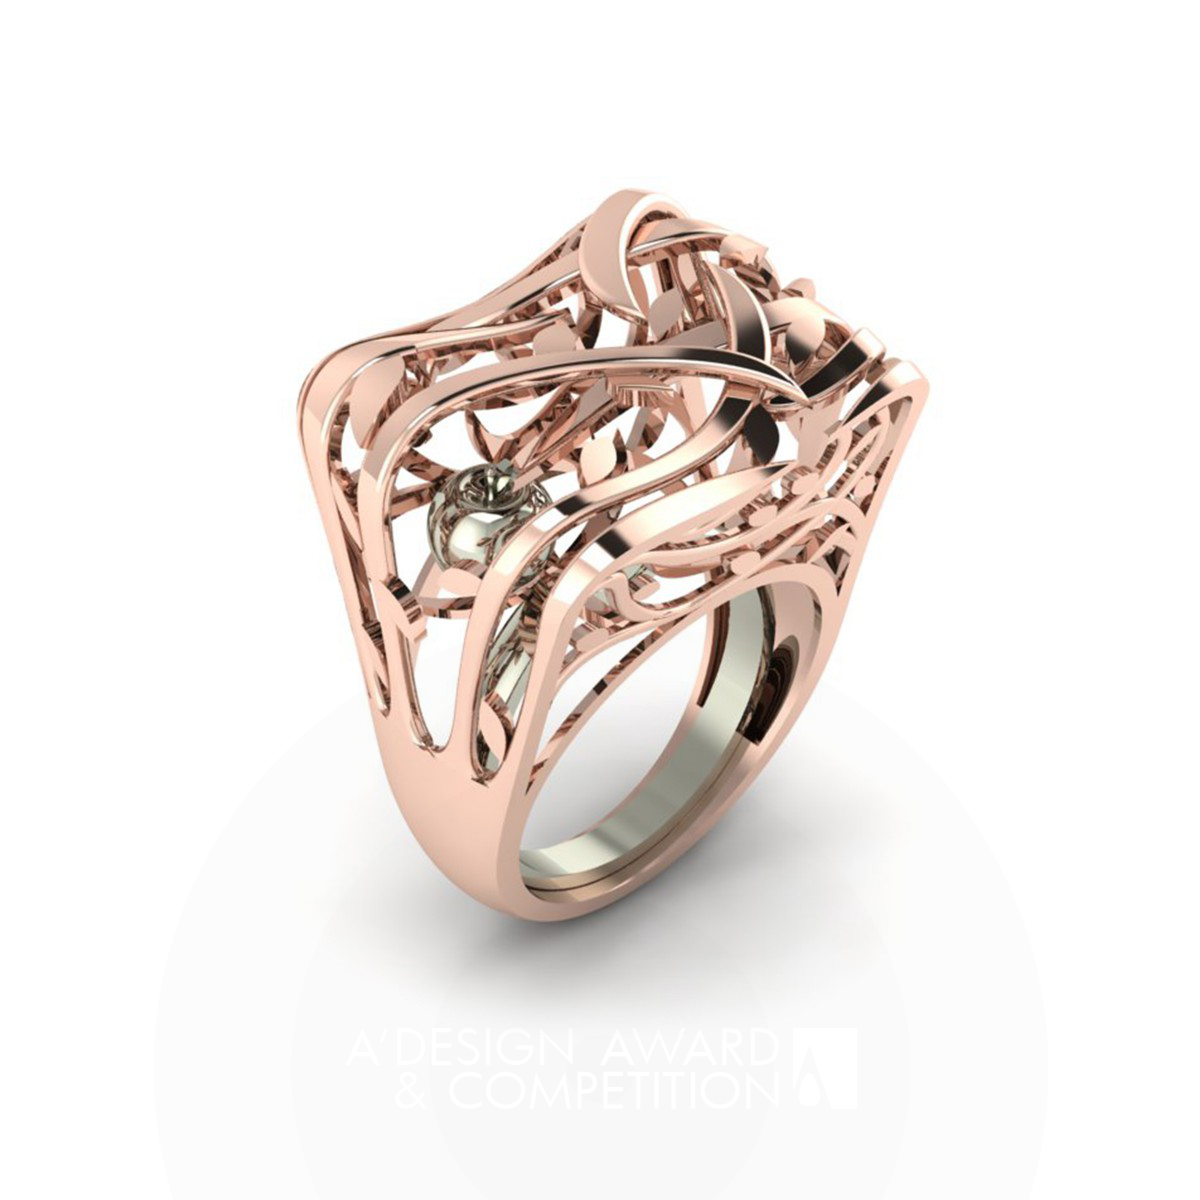 Gravity Ring Jewelry by Mohammad Mahdy Seyfi-Hesamaldin Ghasimi